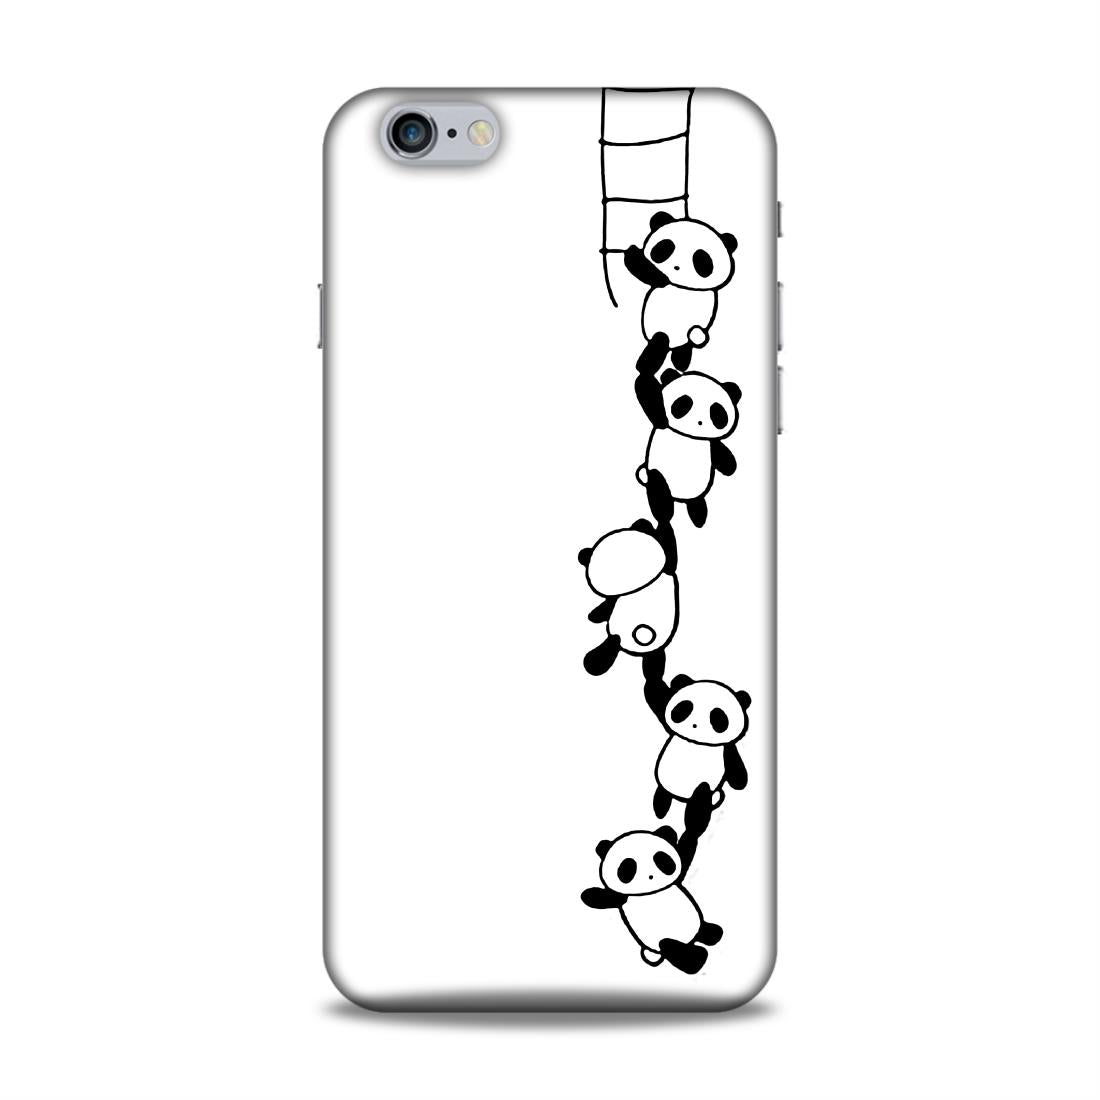 Panda Hard Back Case For Apple iPhone 6 Plus / 6s Plus